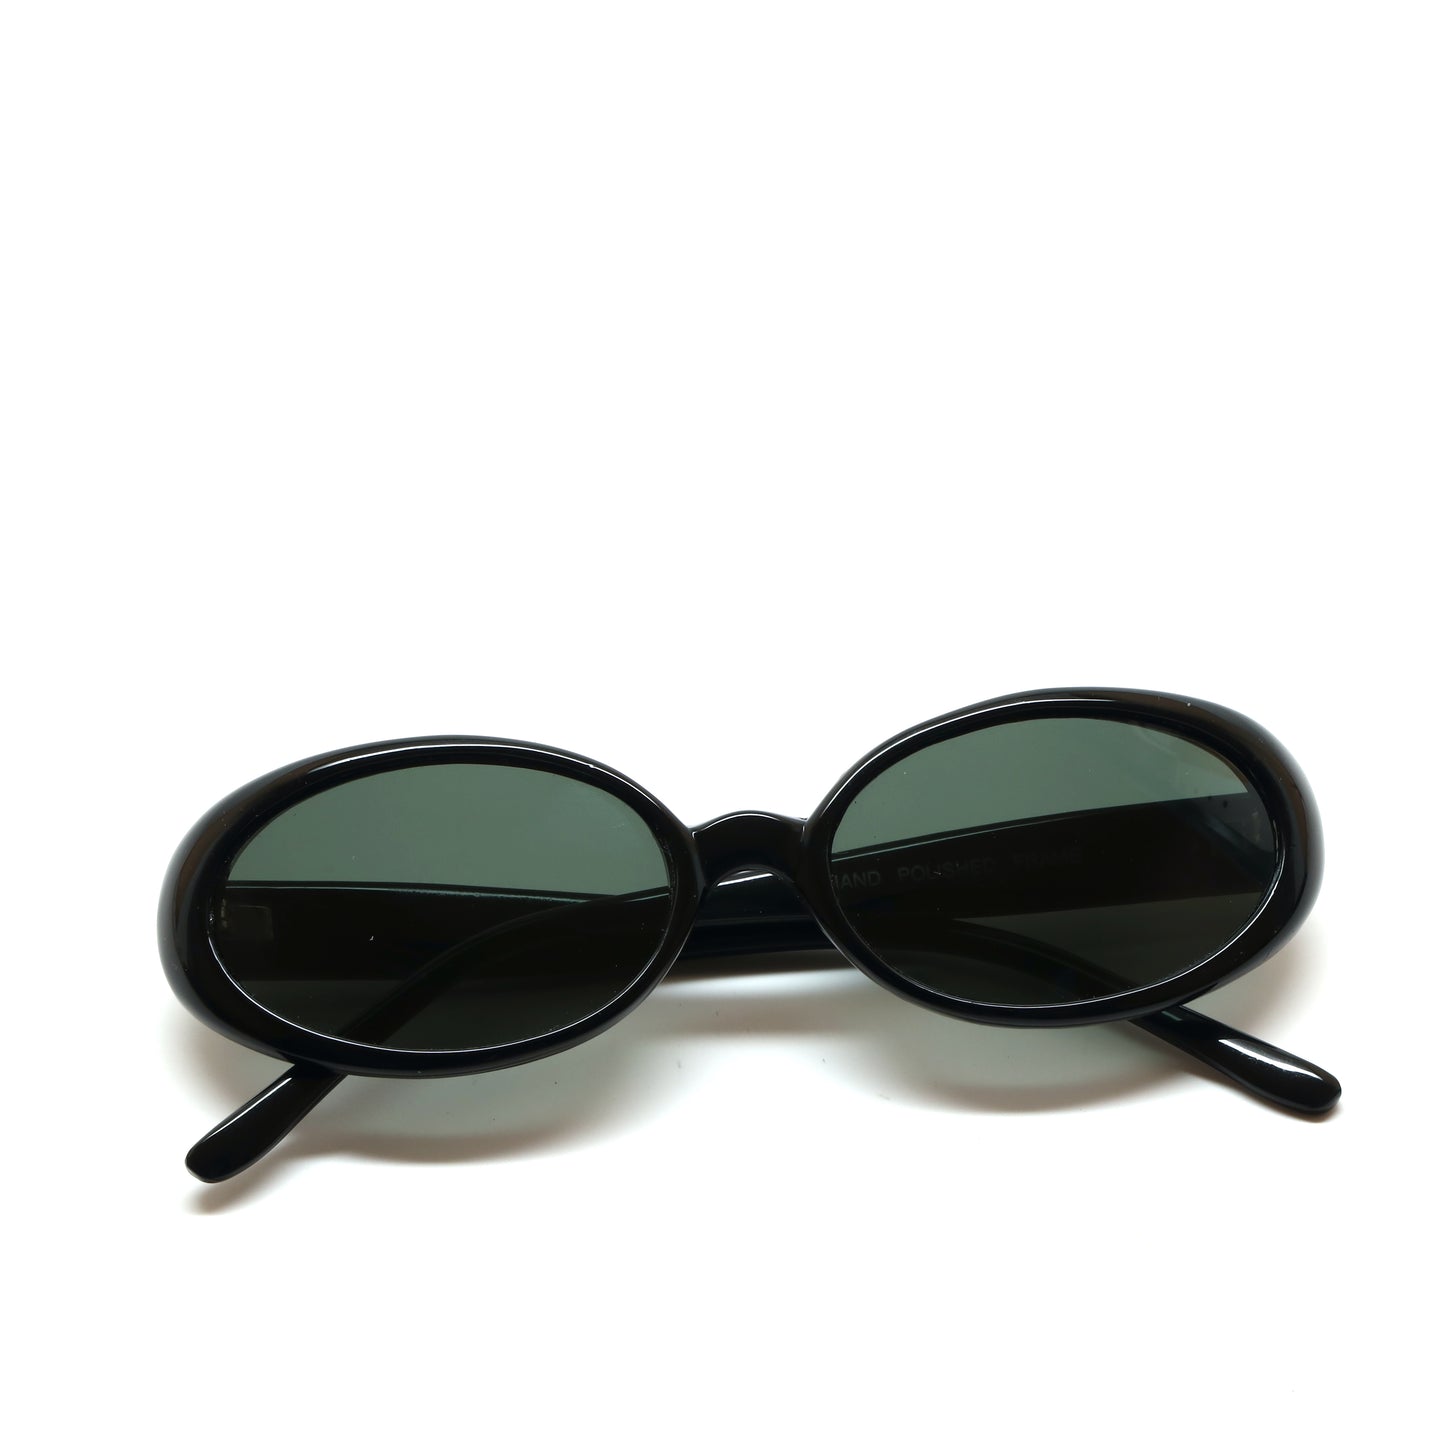 Vintage Standard Size 90s Mod Jane Oval Sunglasses - Black